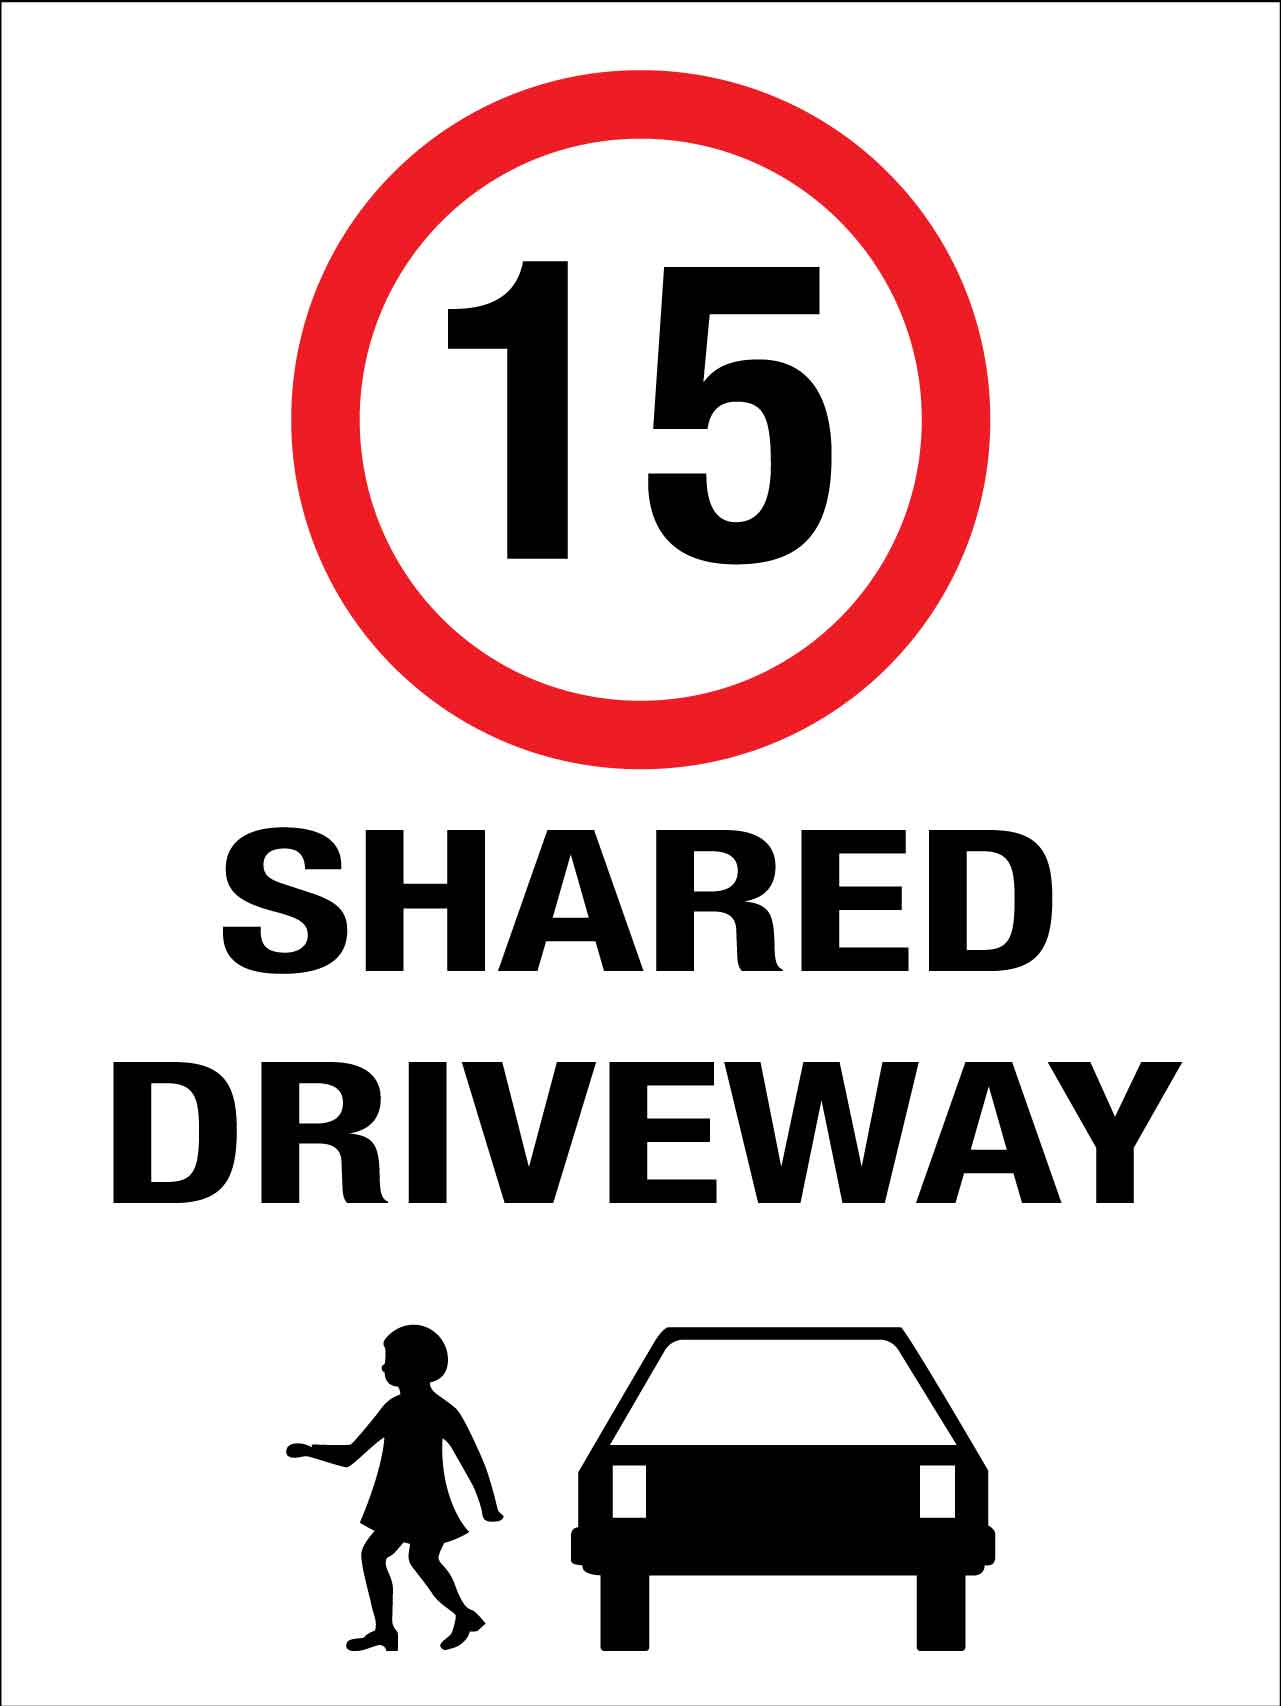 Shared Driveway 15km Speed Limit Sign